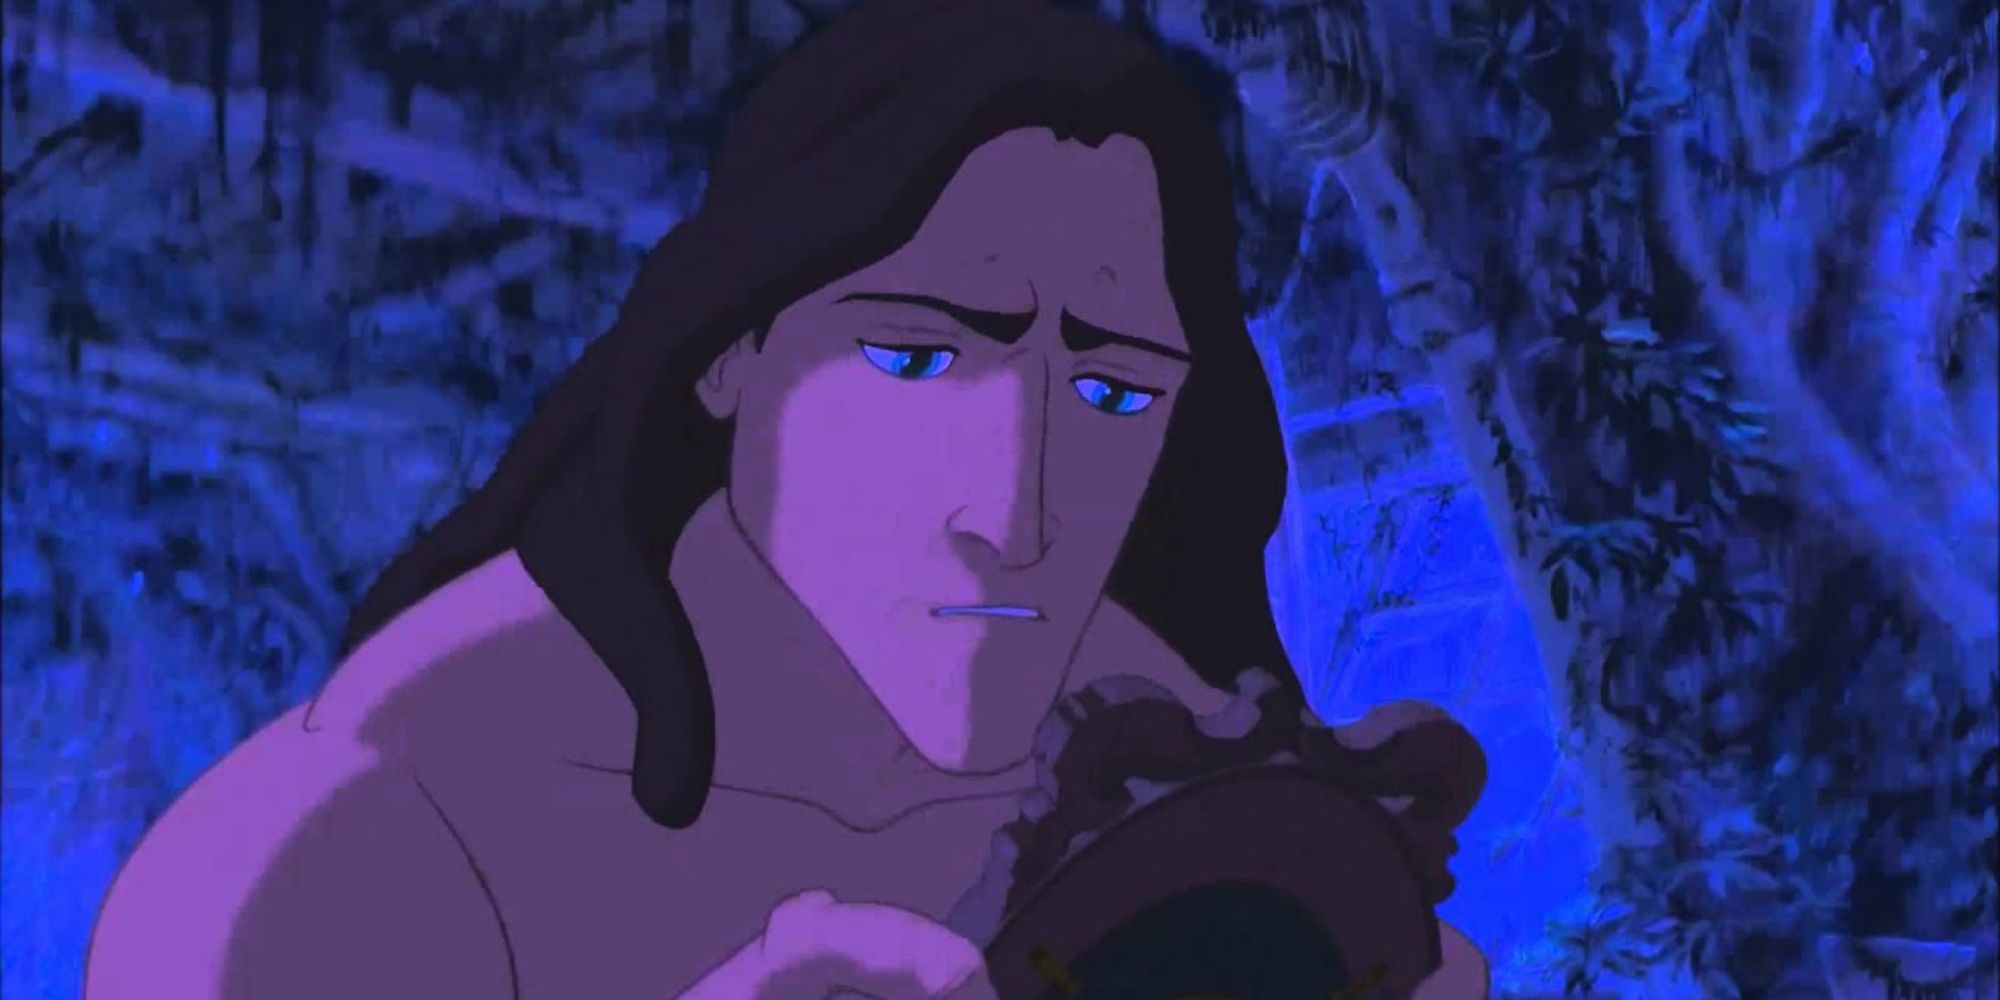 Tarzan from Tarzan (1999) looking at an old photo of his family